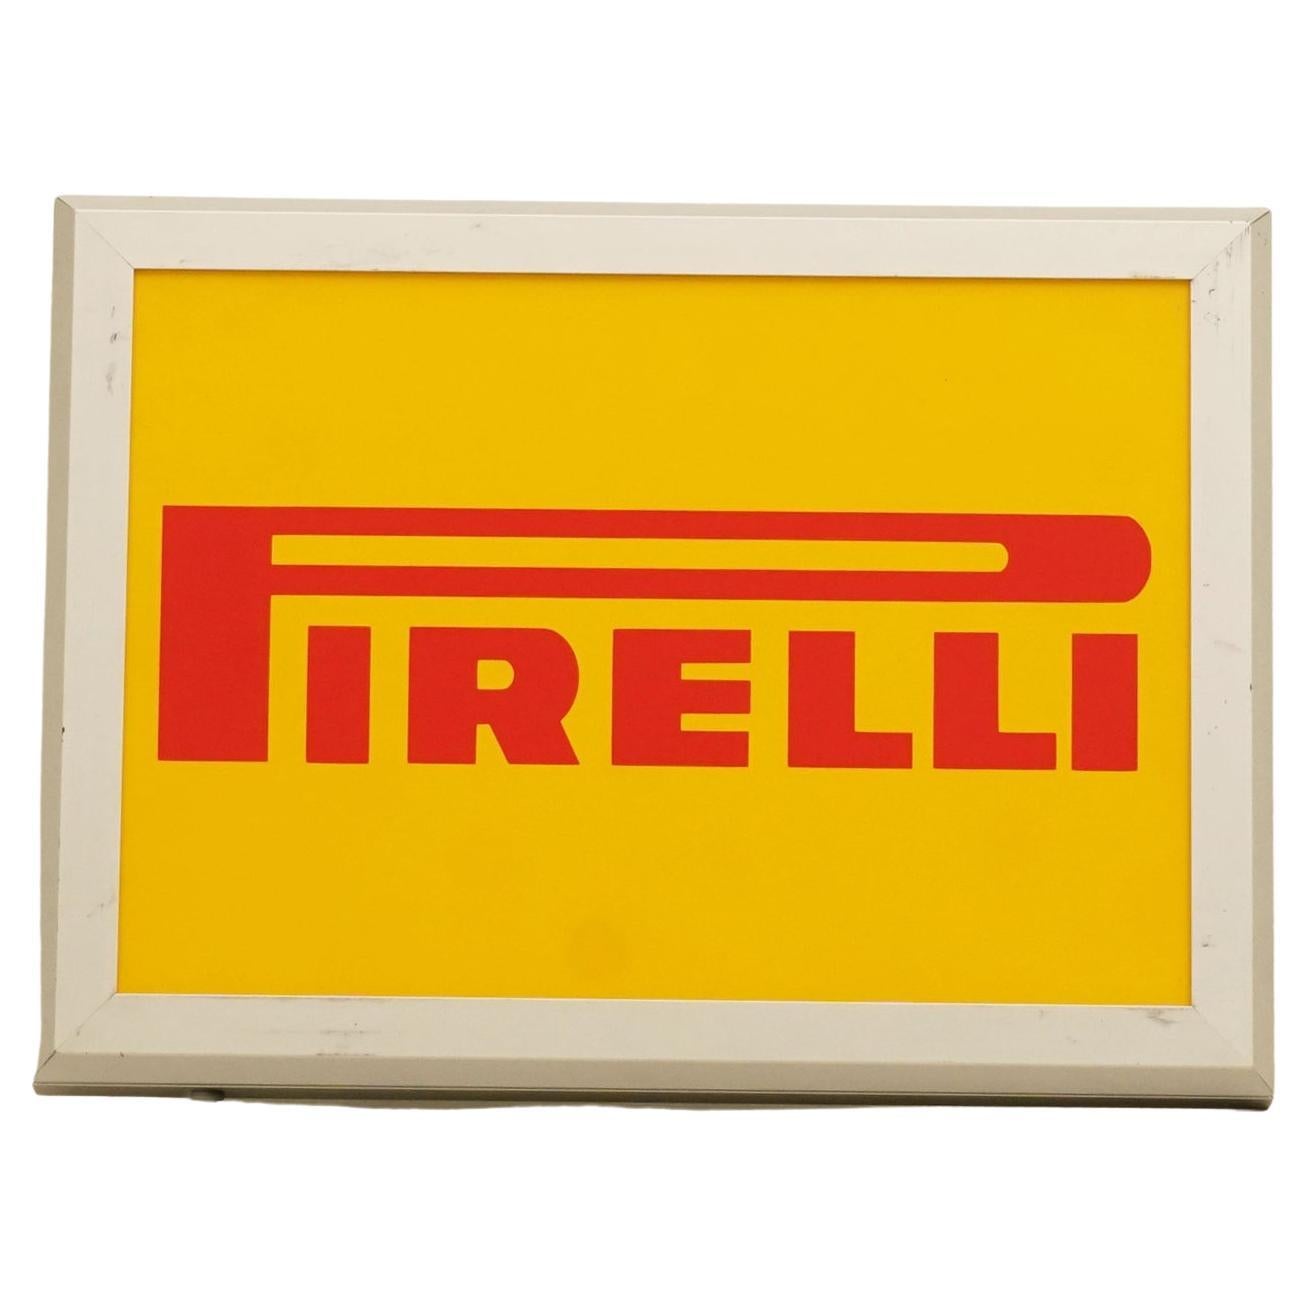 1990s Pirelli Advertising Sign Light